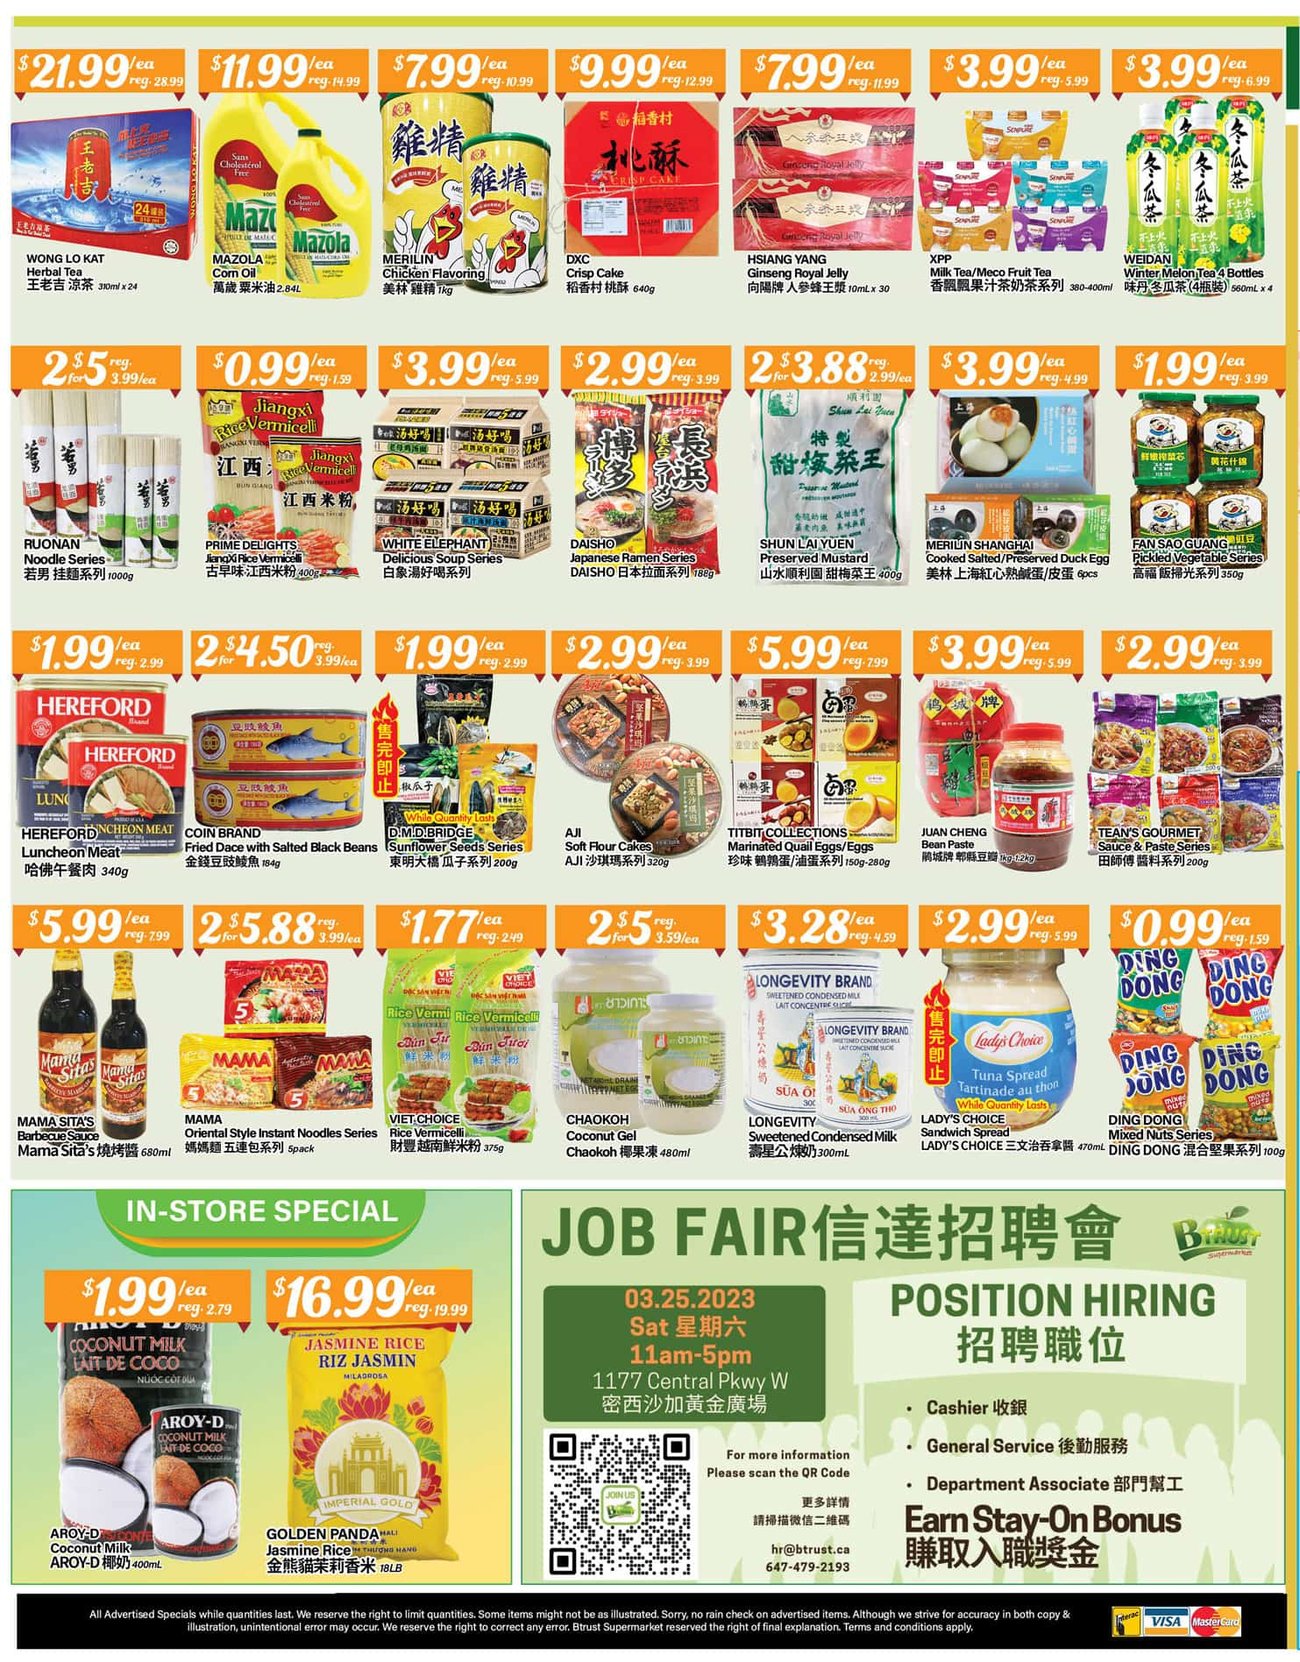 BTrust supermarket - Mississauga - Weekly Flyer Specials - Page 3